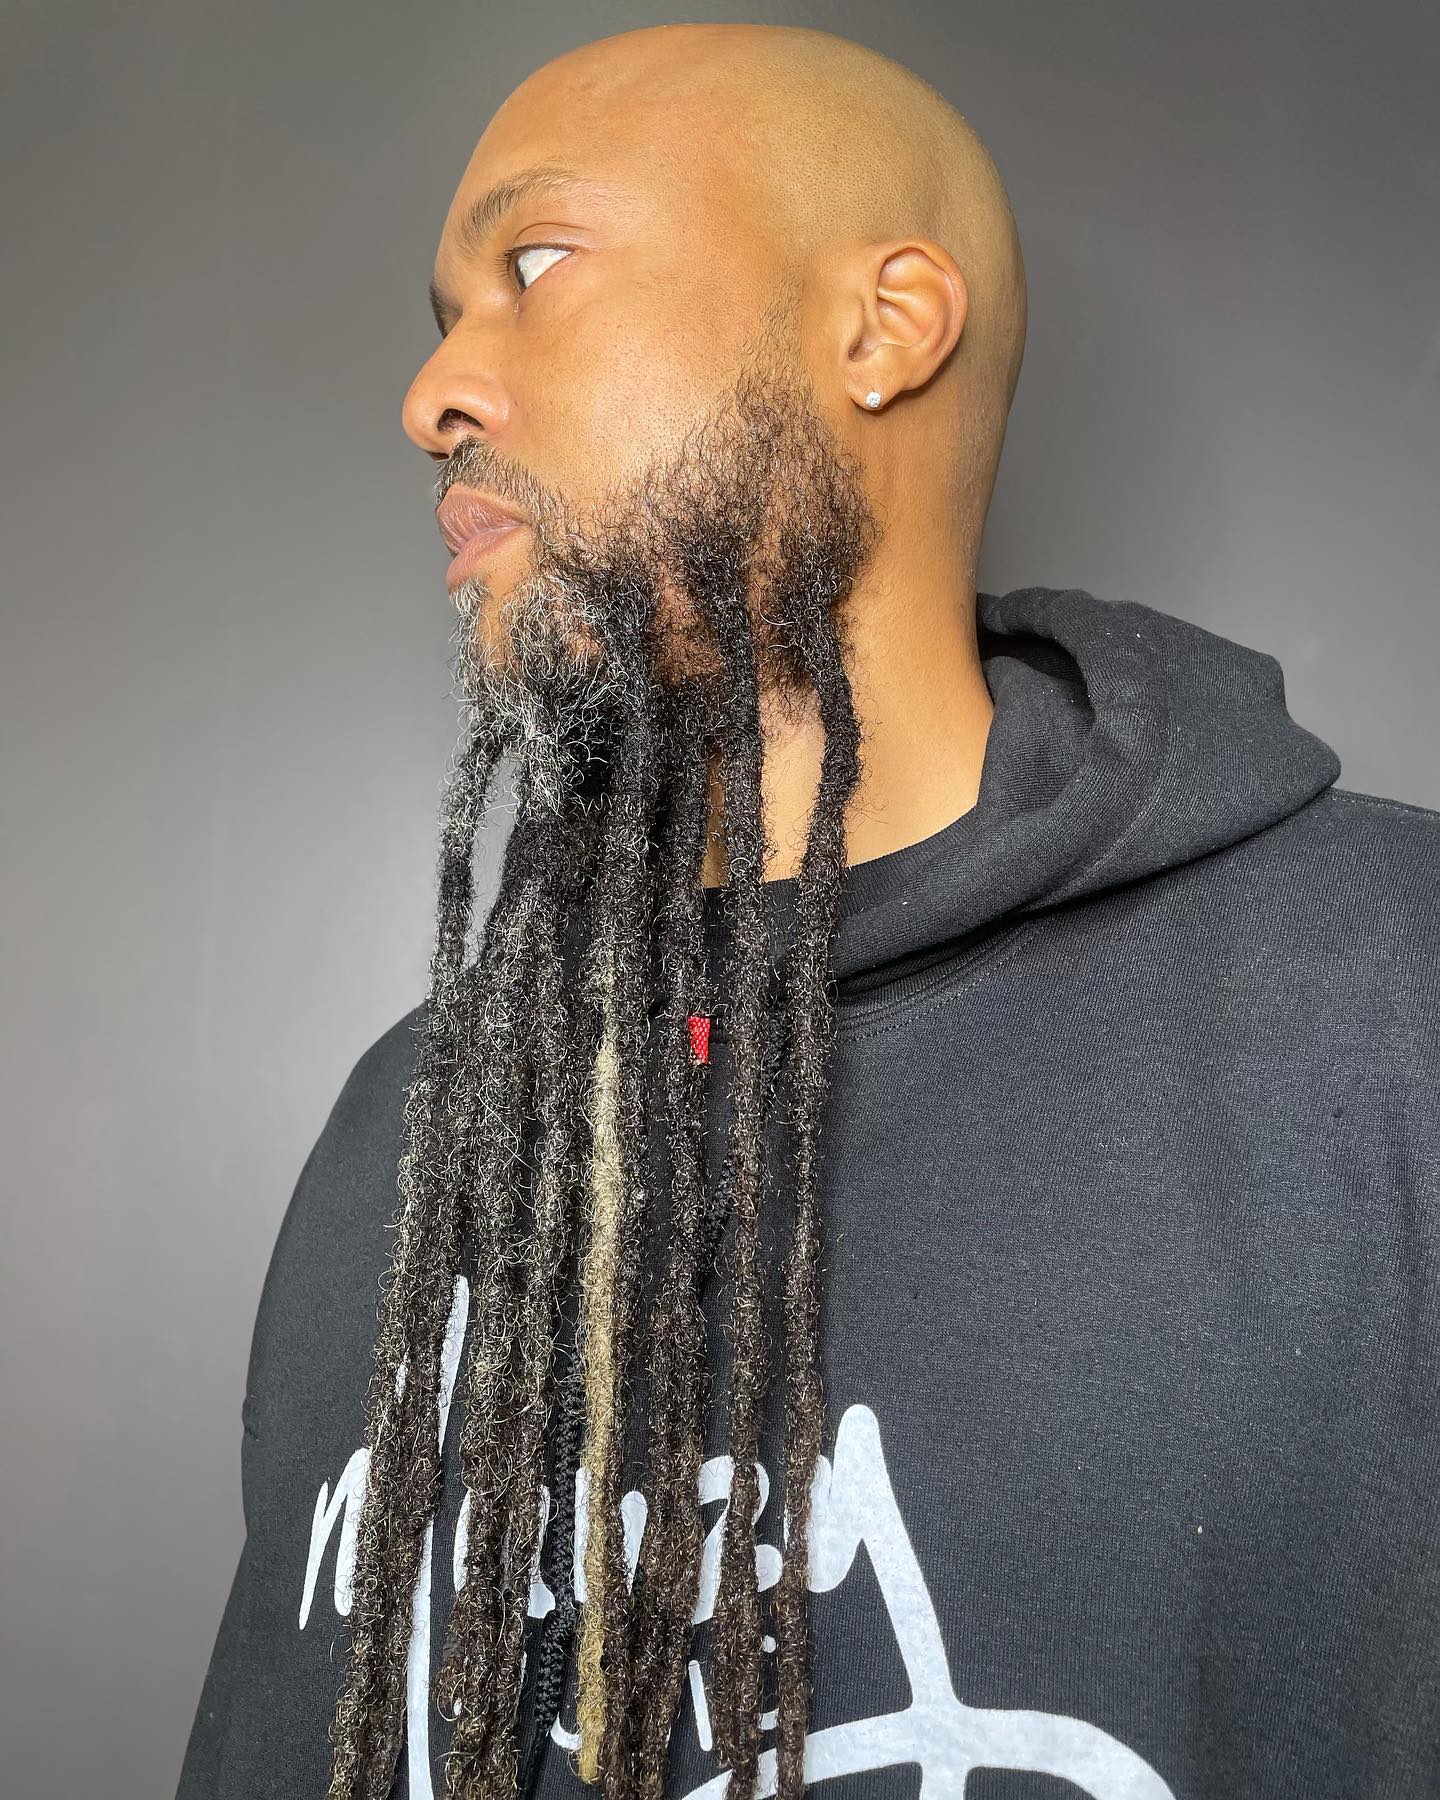 Image of Dreadlock Beard inspired by Dreadlocks Hairstyles for Men